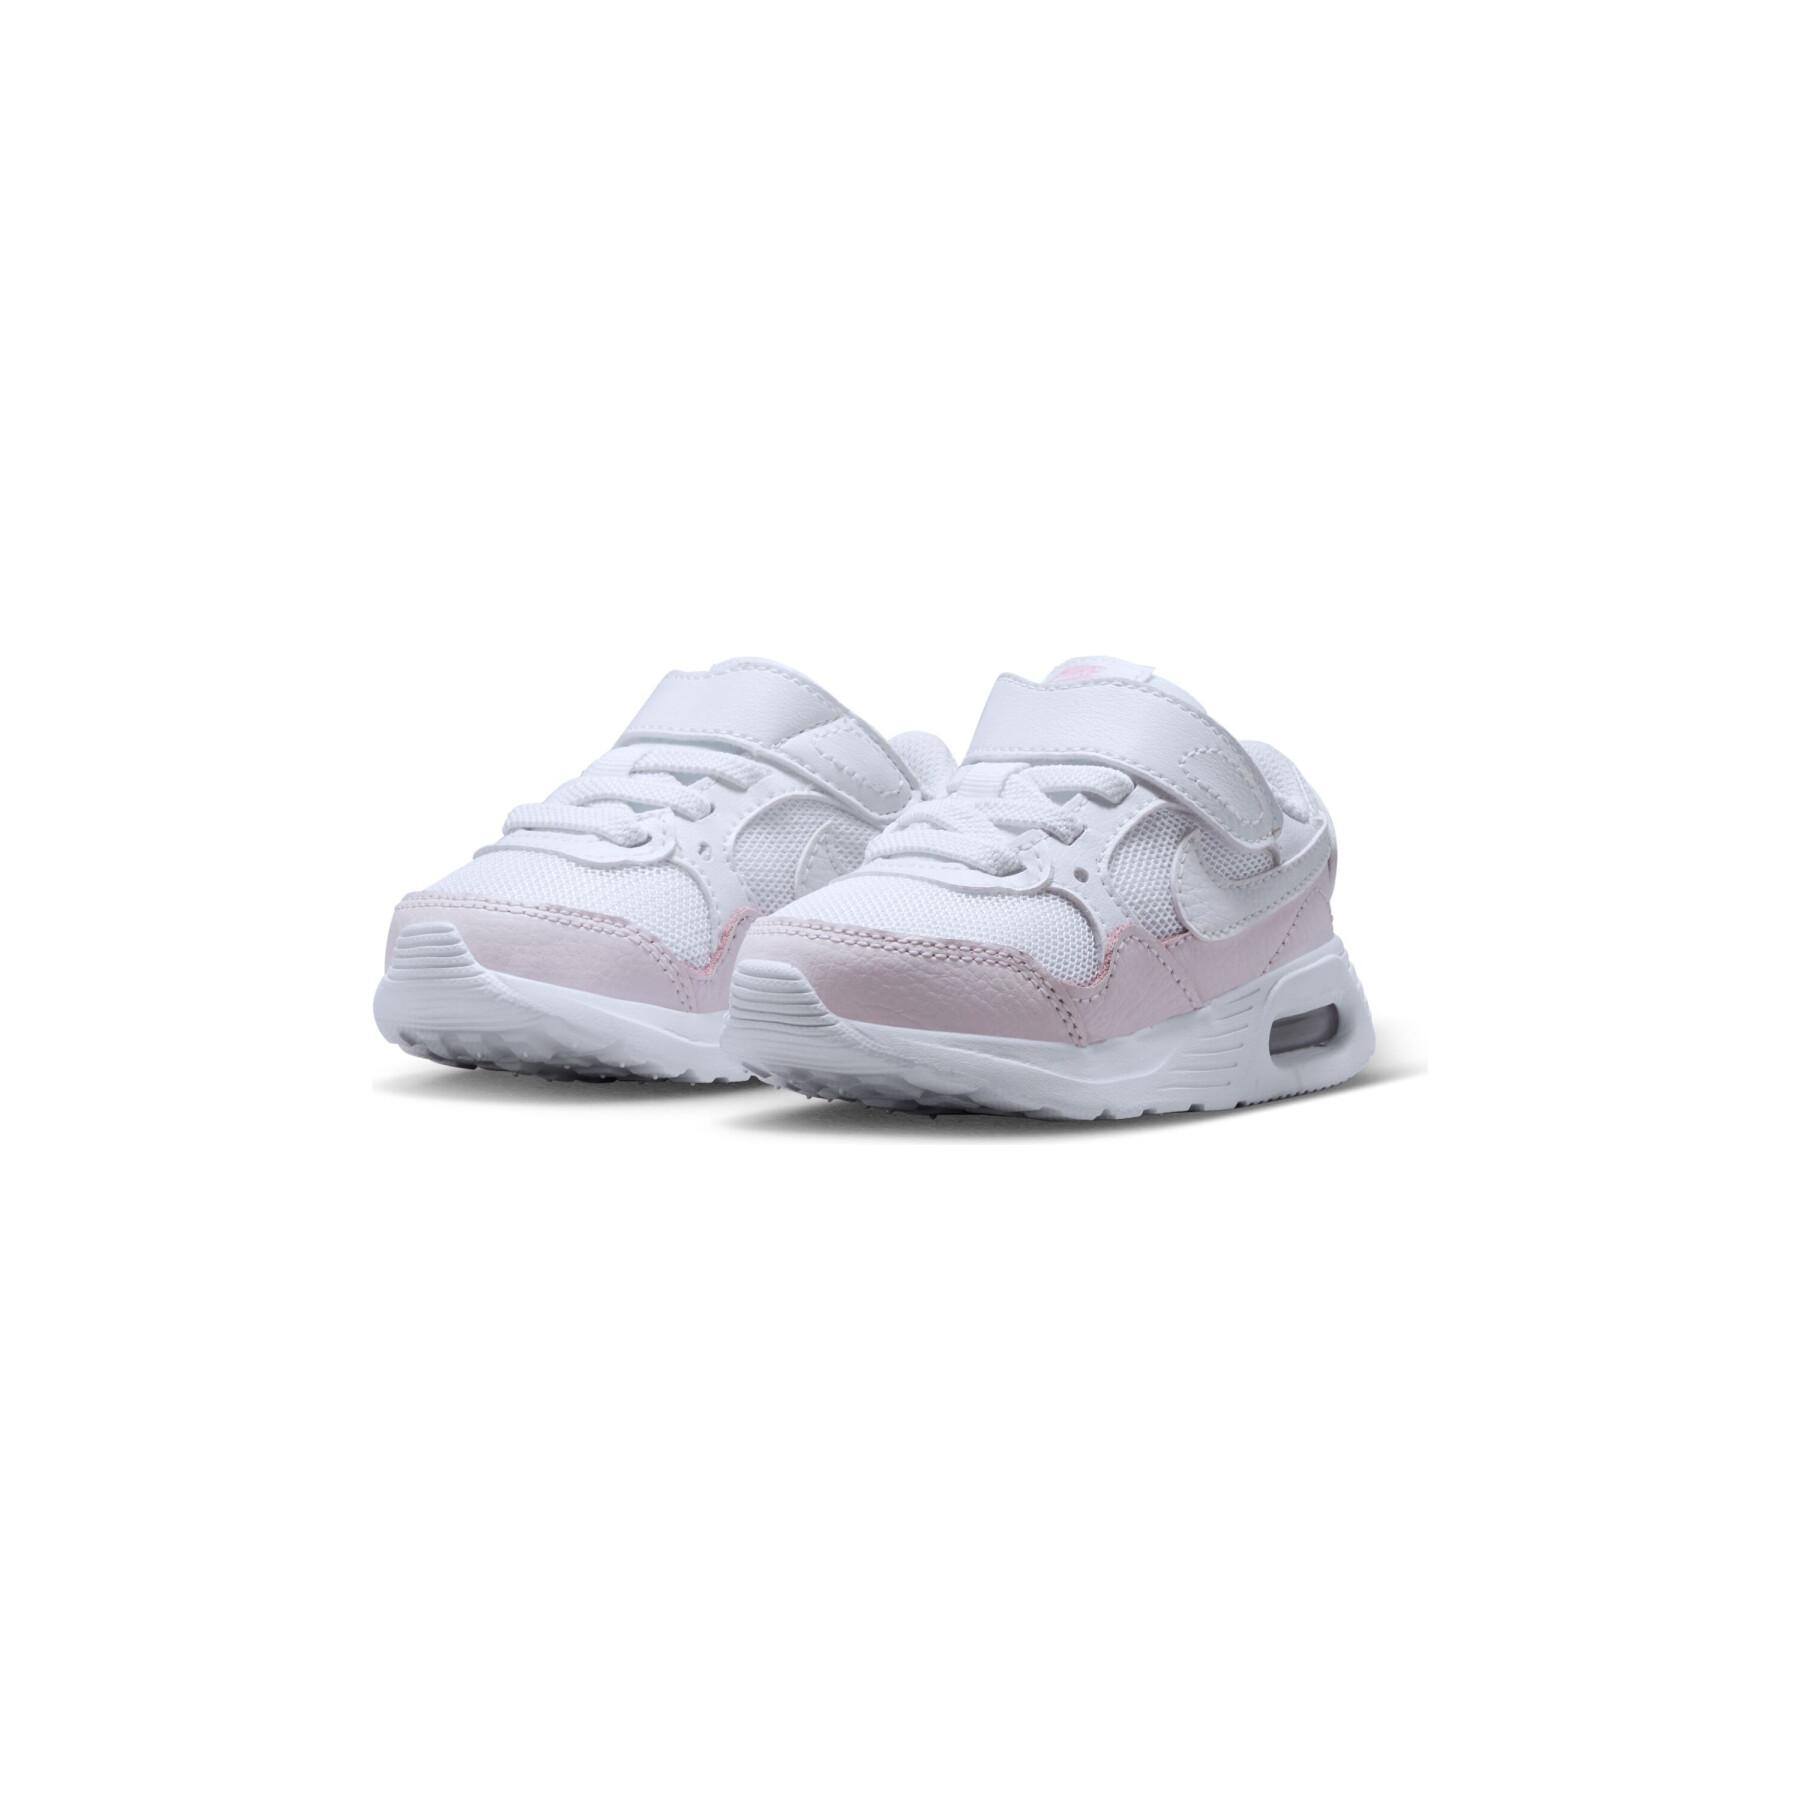 Zapatillas para bebé niño Nike Air Max SC